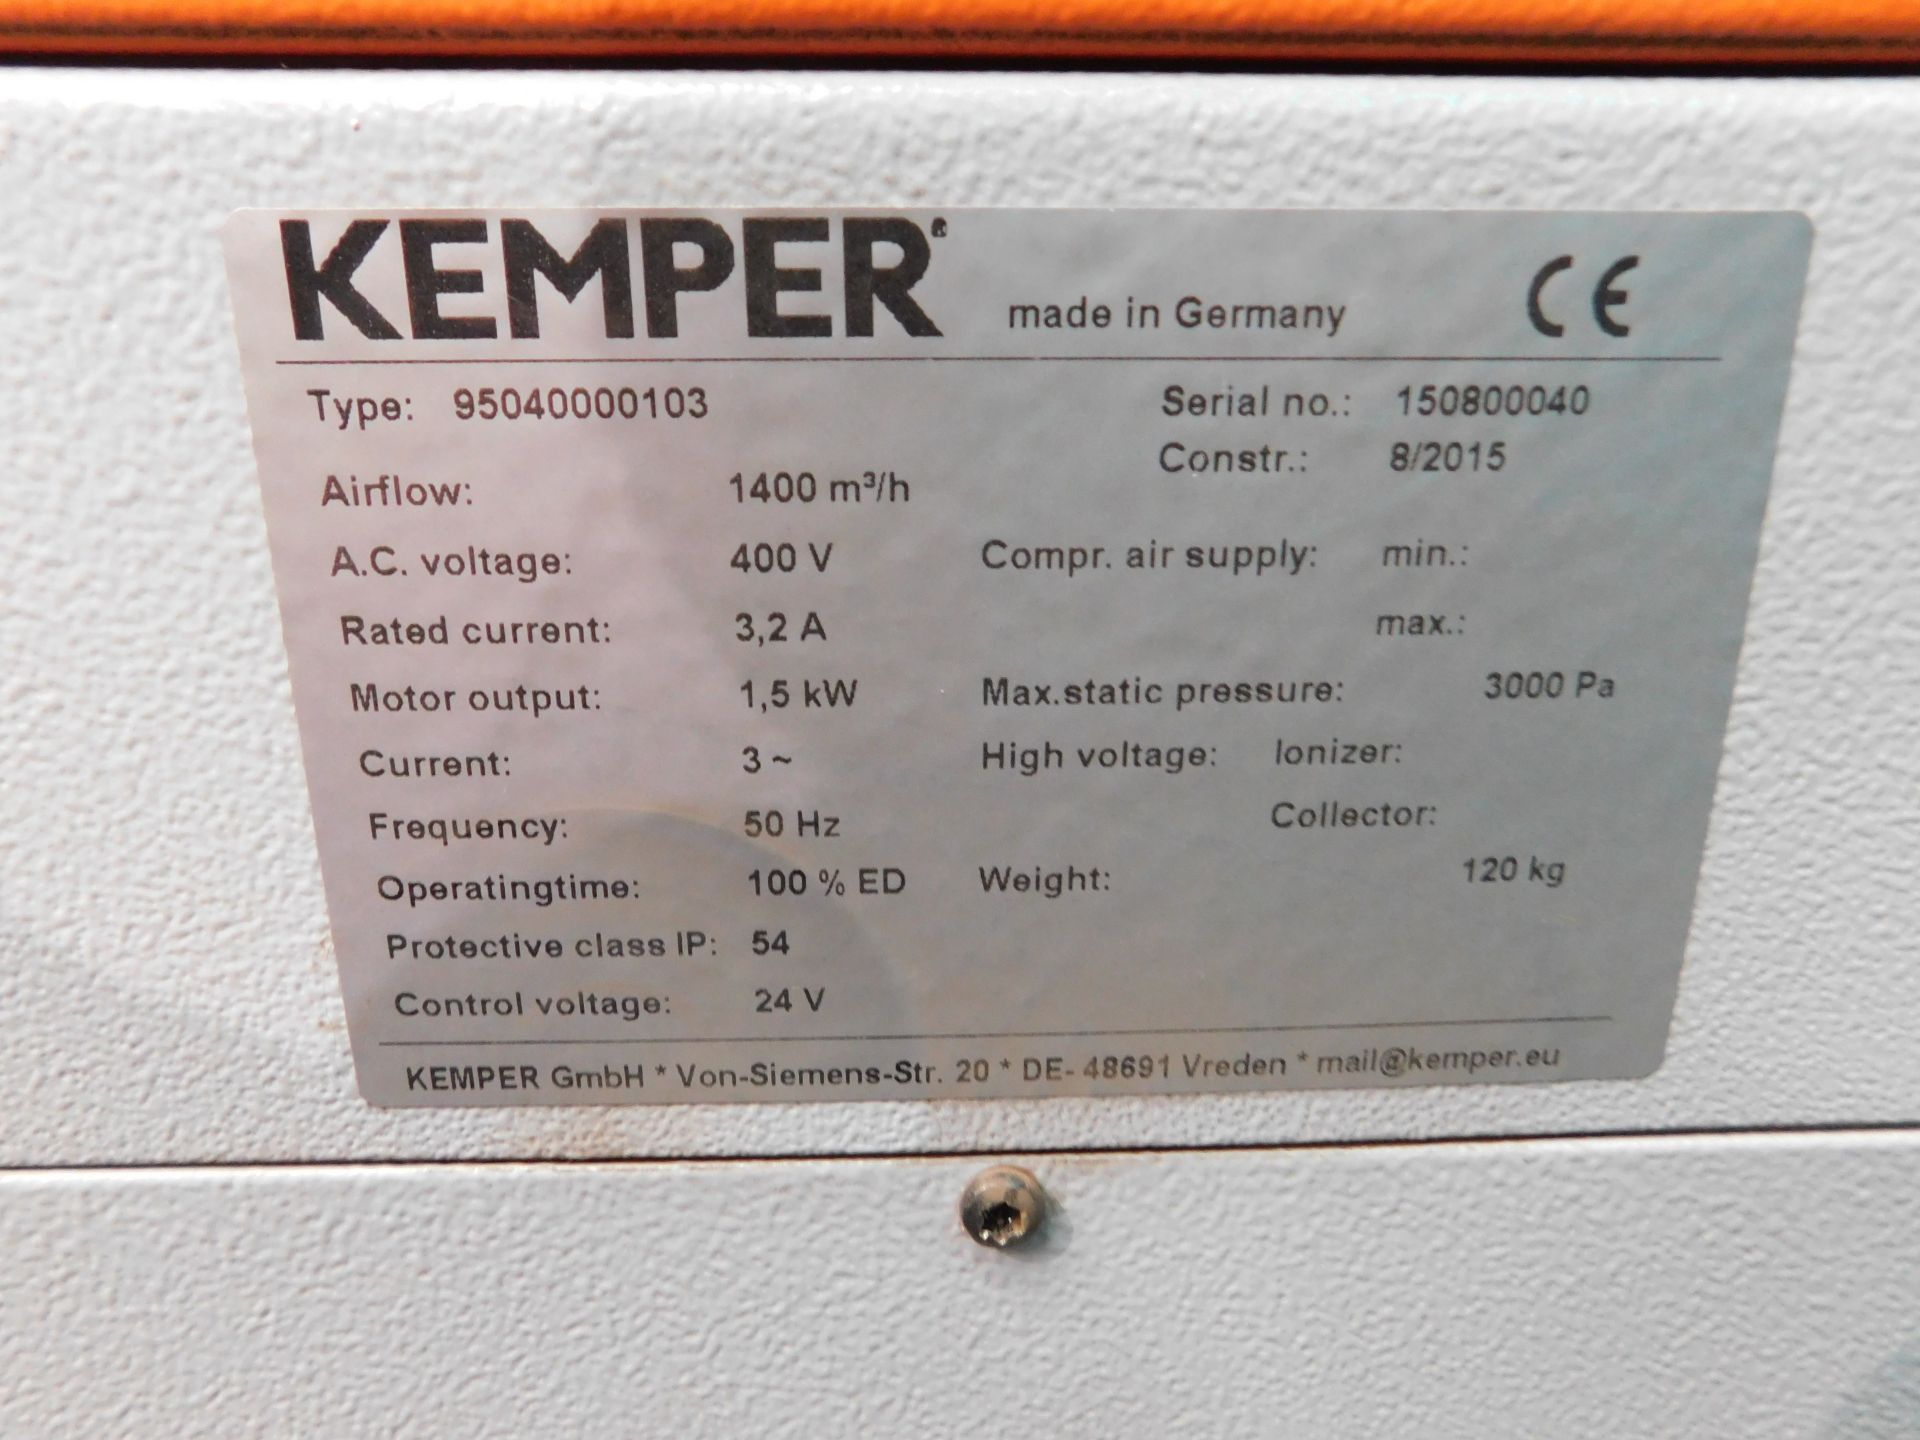 Kemper Welding Table & Filter Unit (2015), serial number 150800040 - Image 3 of 4